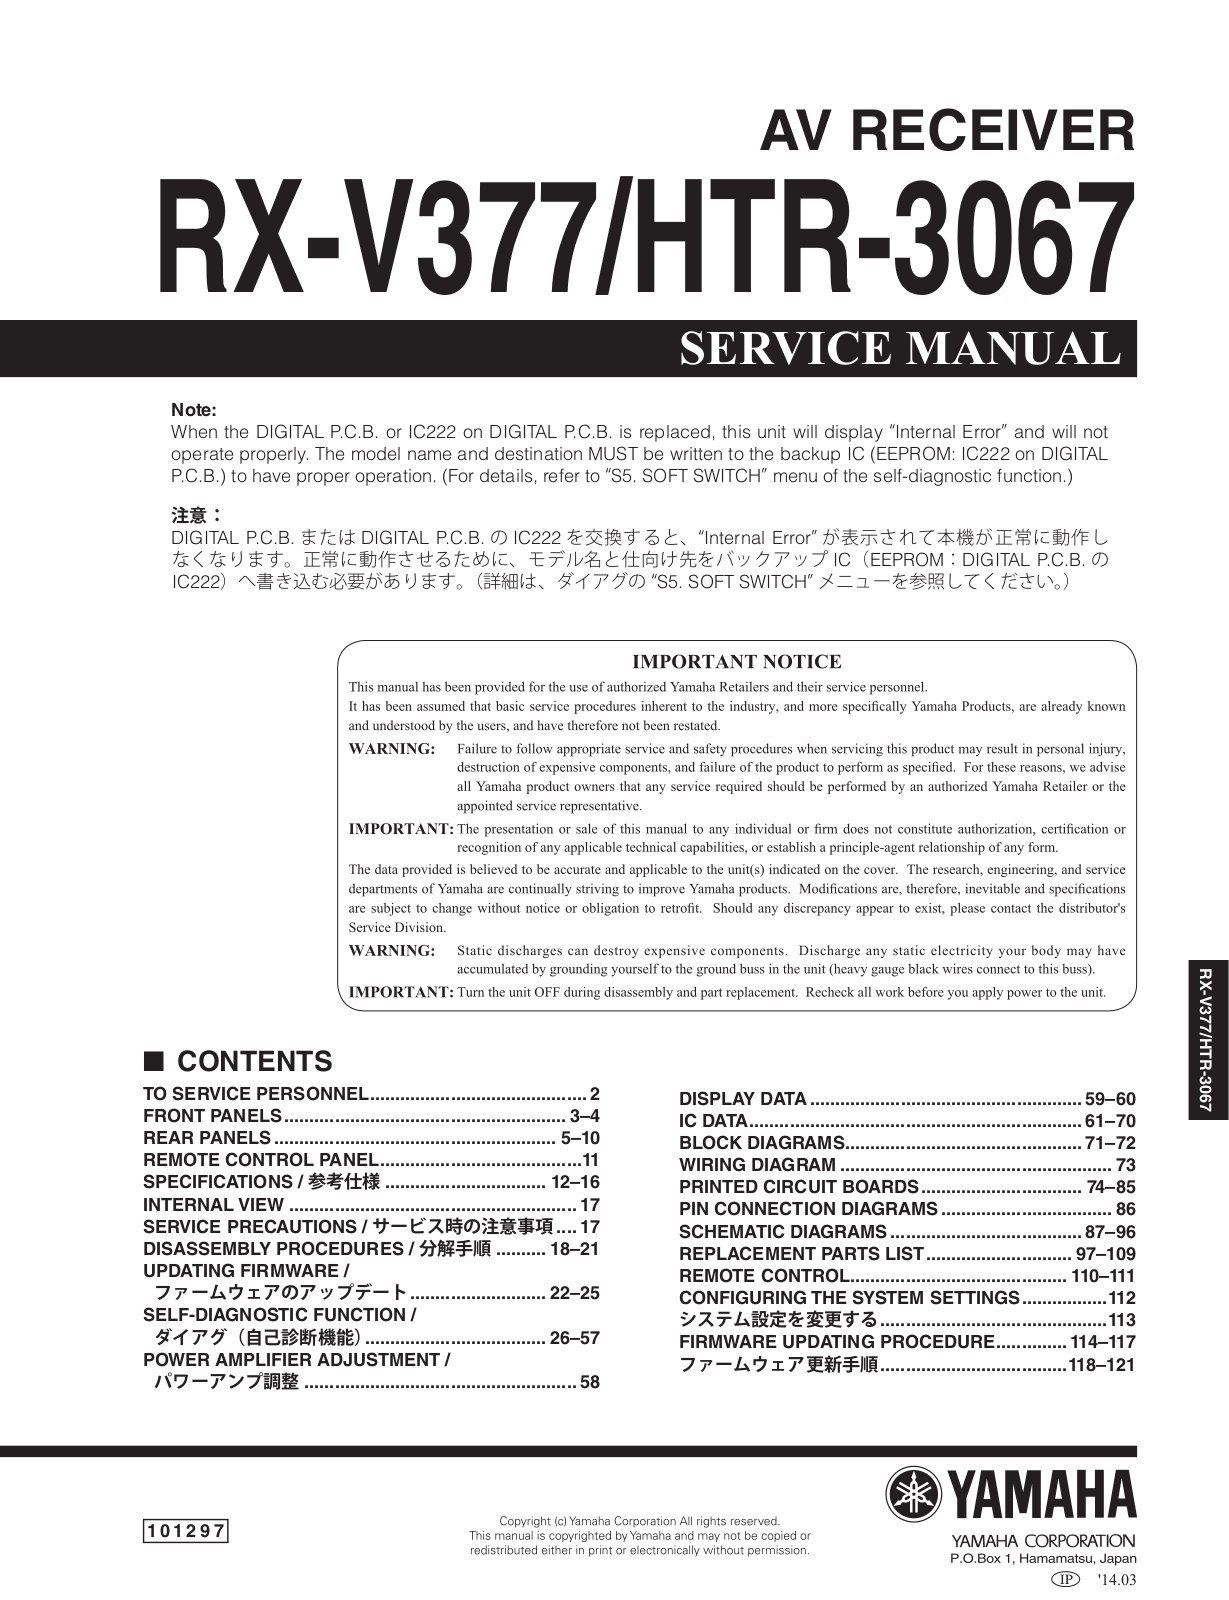 Yamaha RX-V377, HTR-3067 Service manual